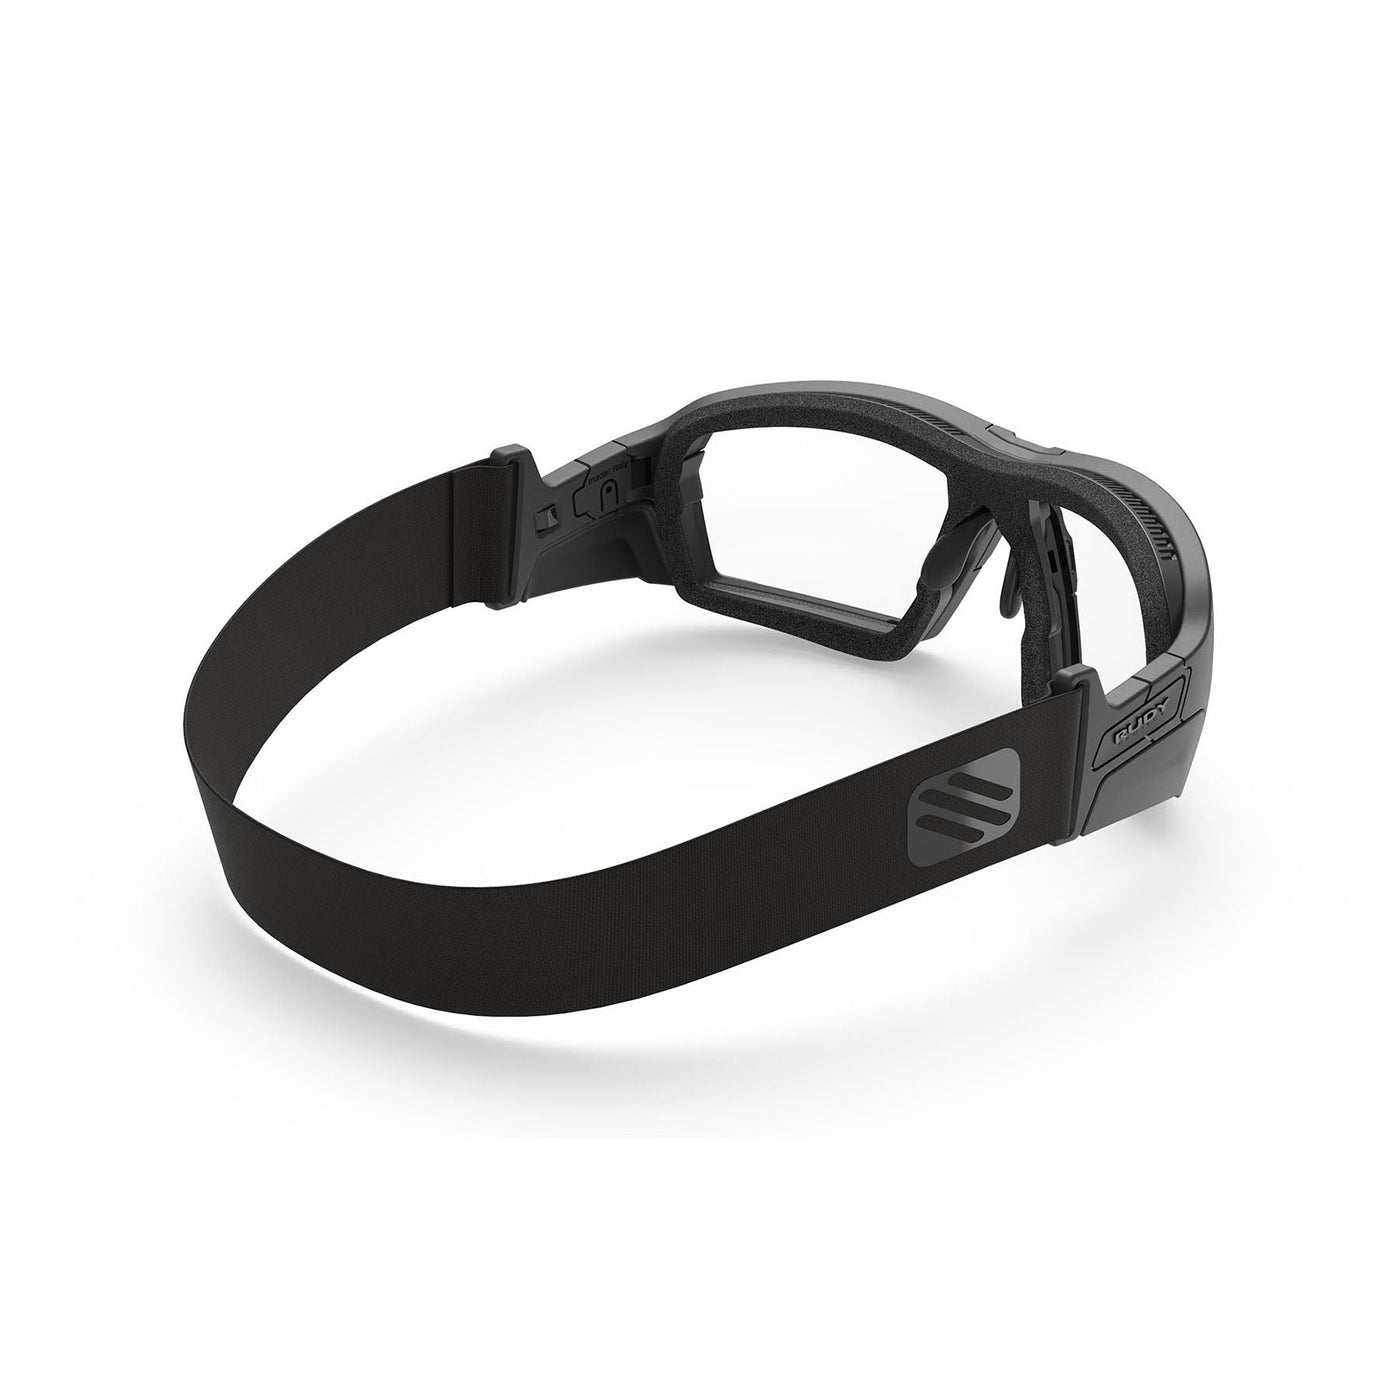 Rudy Project prescription hiking and glacier sport sunglasses#color_agent-q-guard-matte-black-with-transparent-lenses